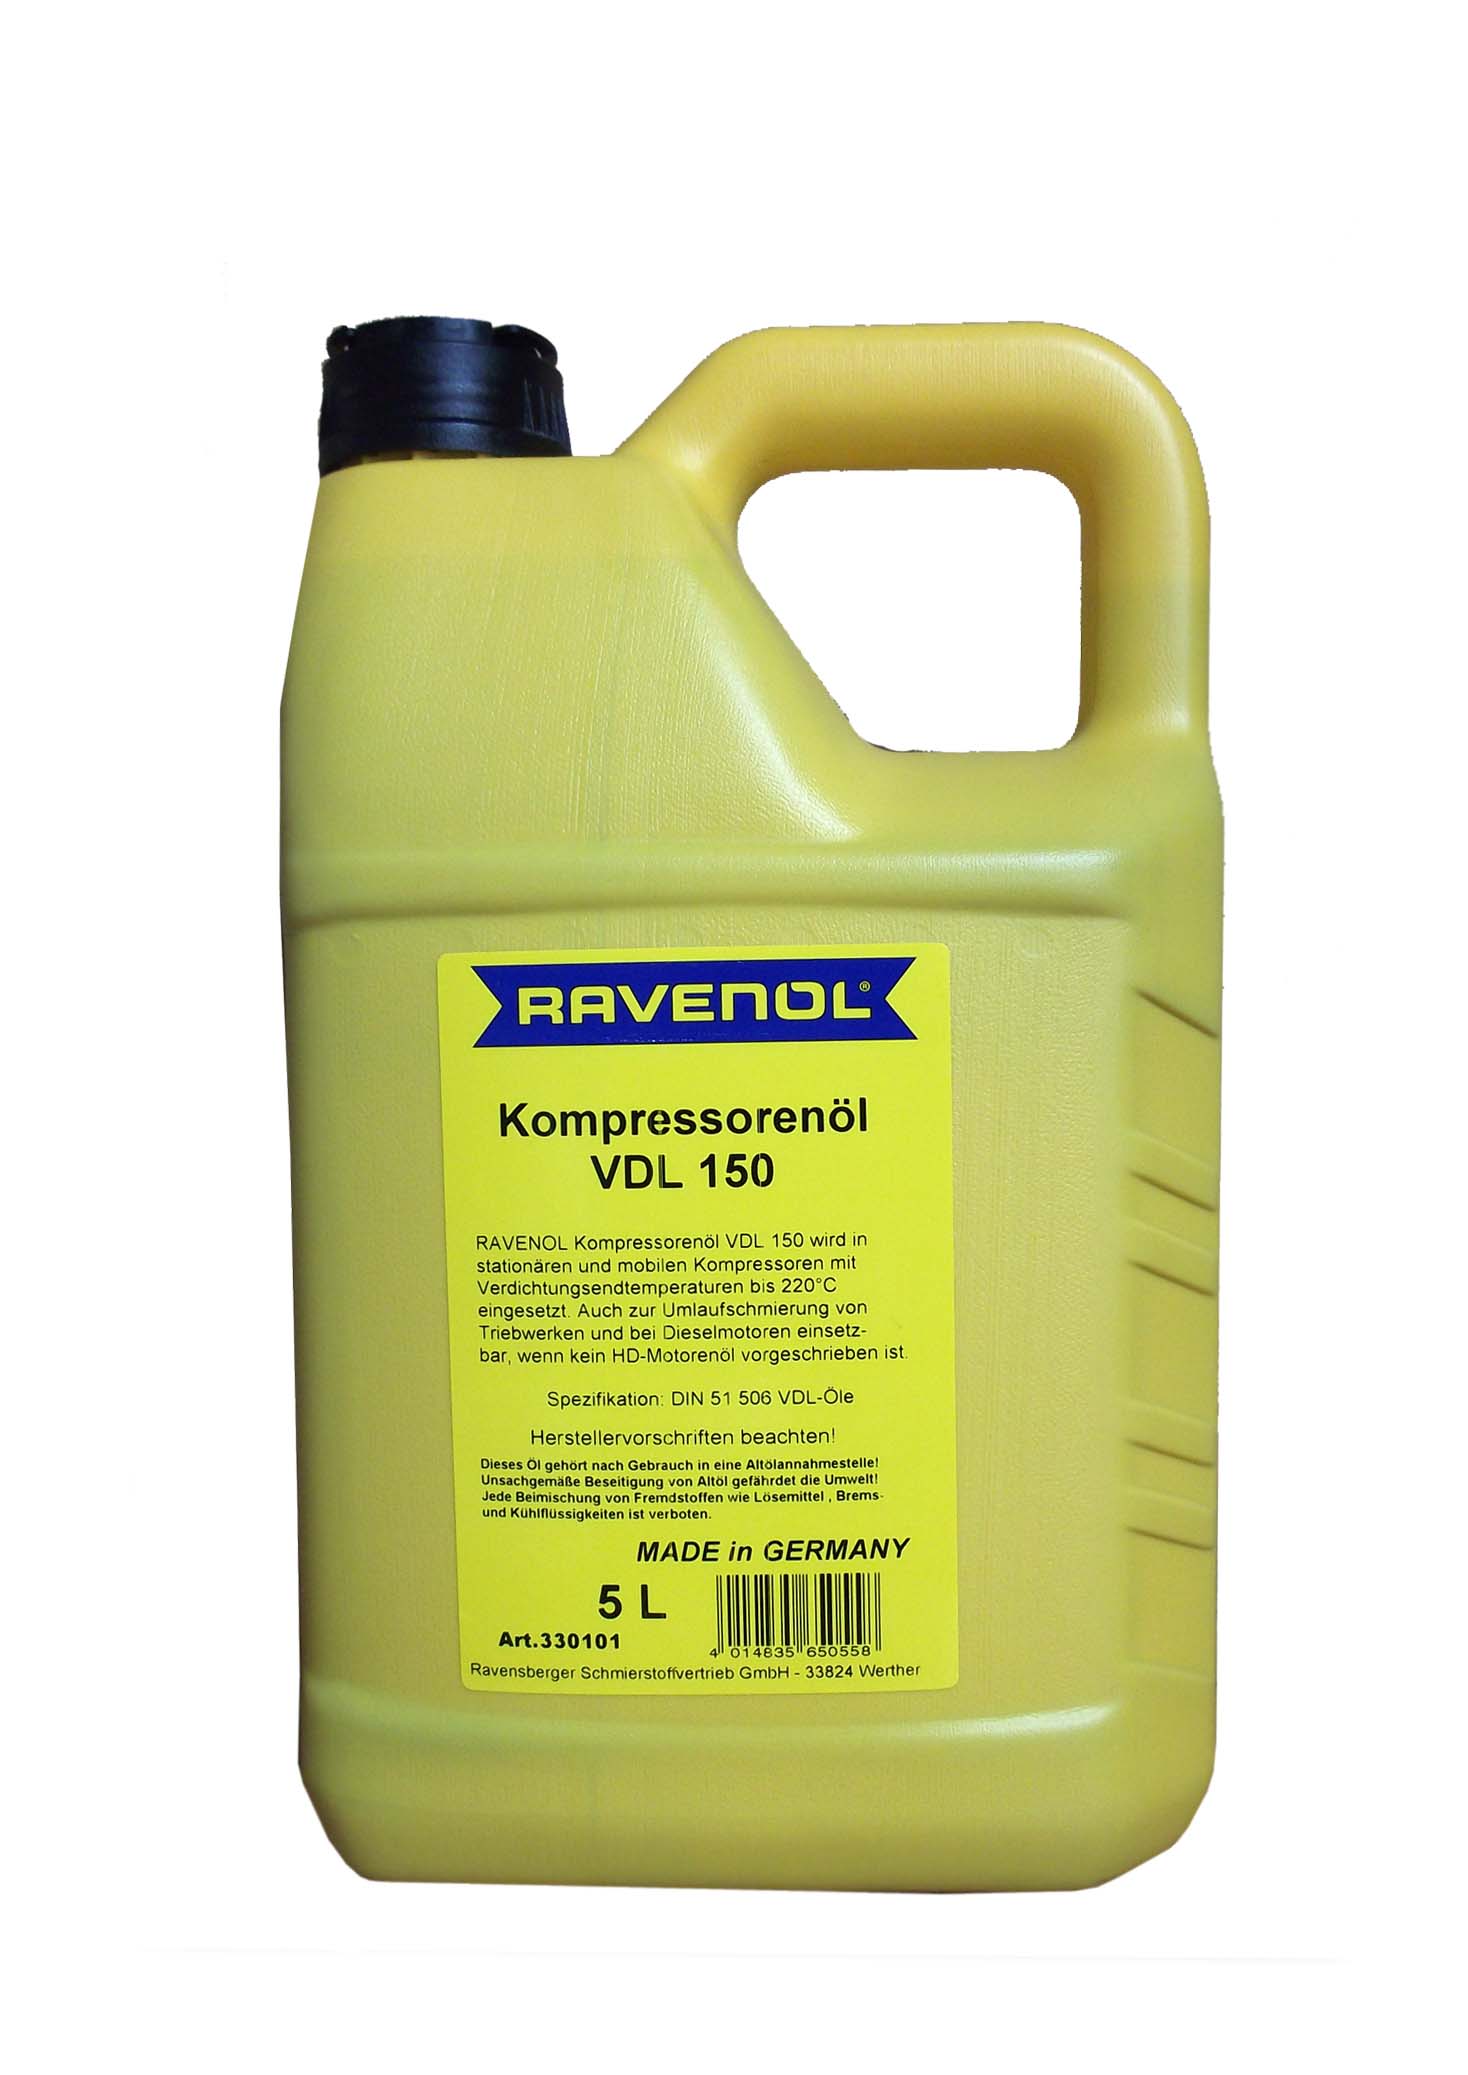 Ravenol vdl. Компрессорное масло Ravenol Kompressorenoel VDL 100. VDL 150 масло компрессорное. VDL 220 масло компрессорное. Ravenol 4014835736153 масло компрессорное Kompressorenoel VDL 100 5л.